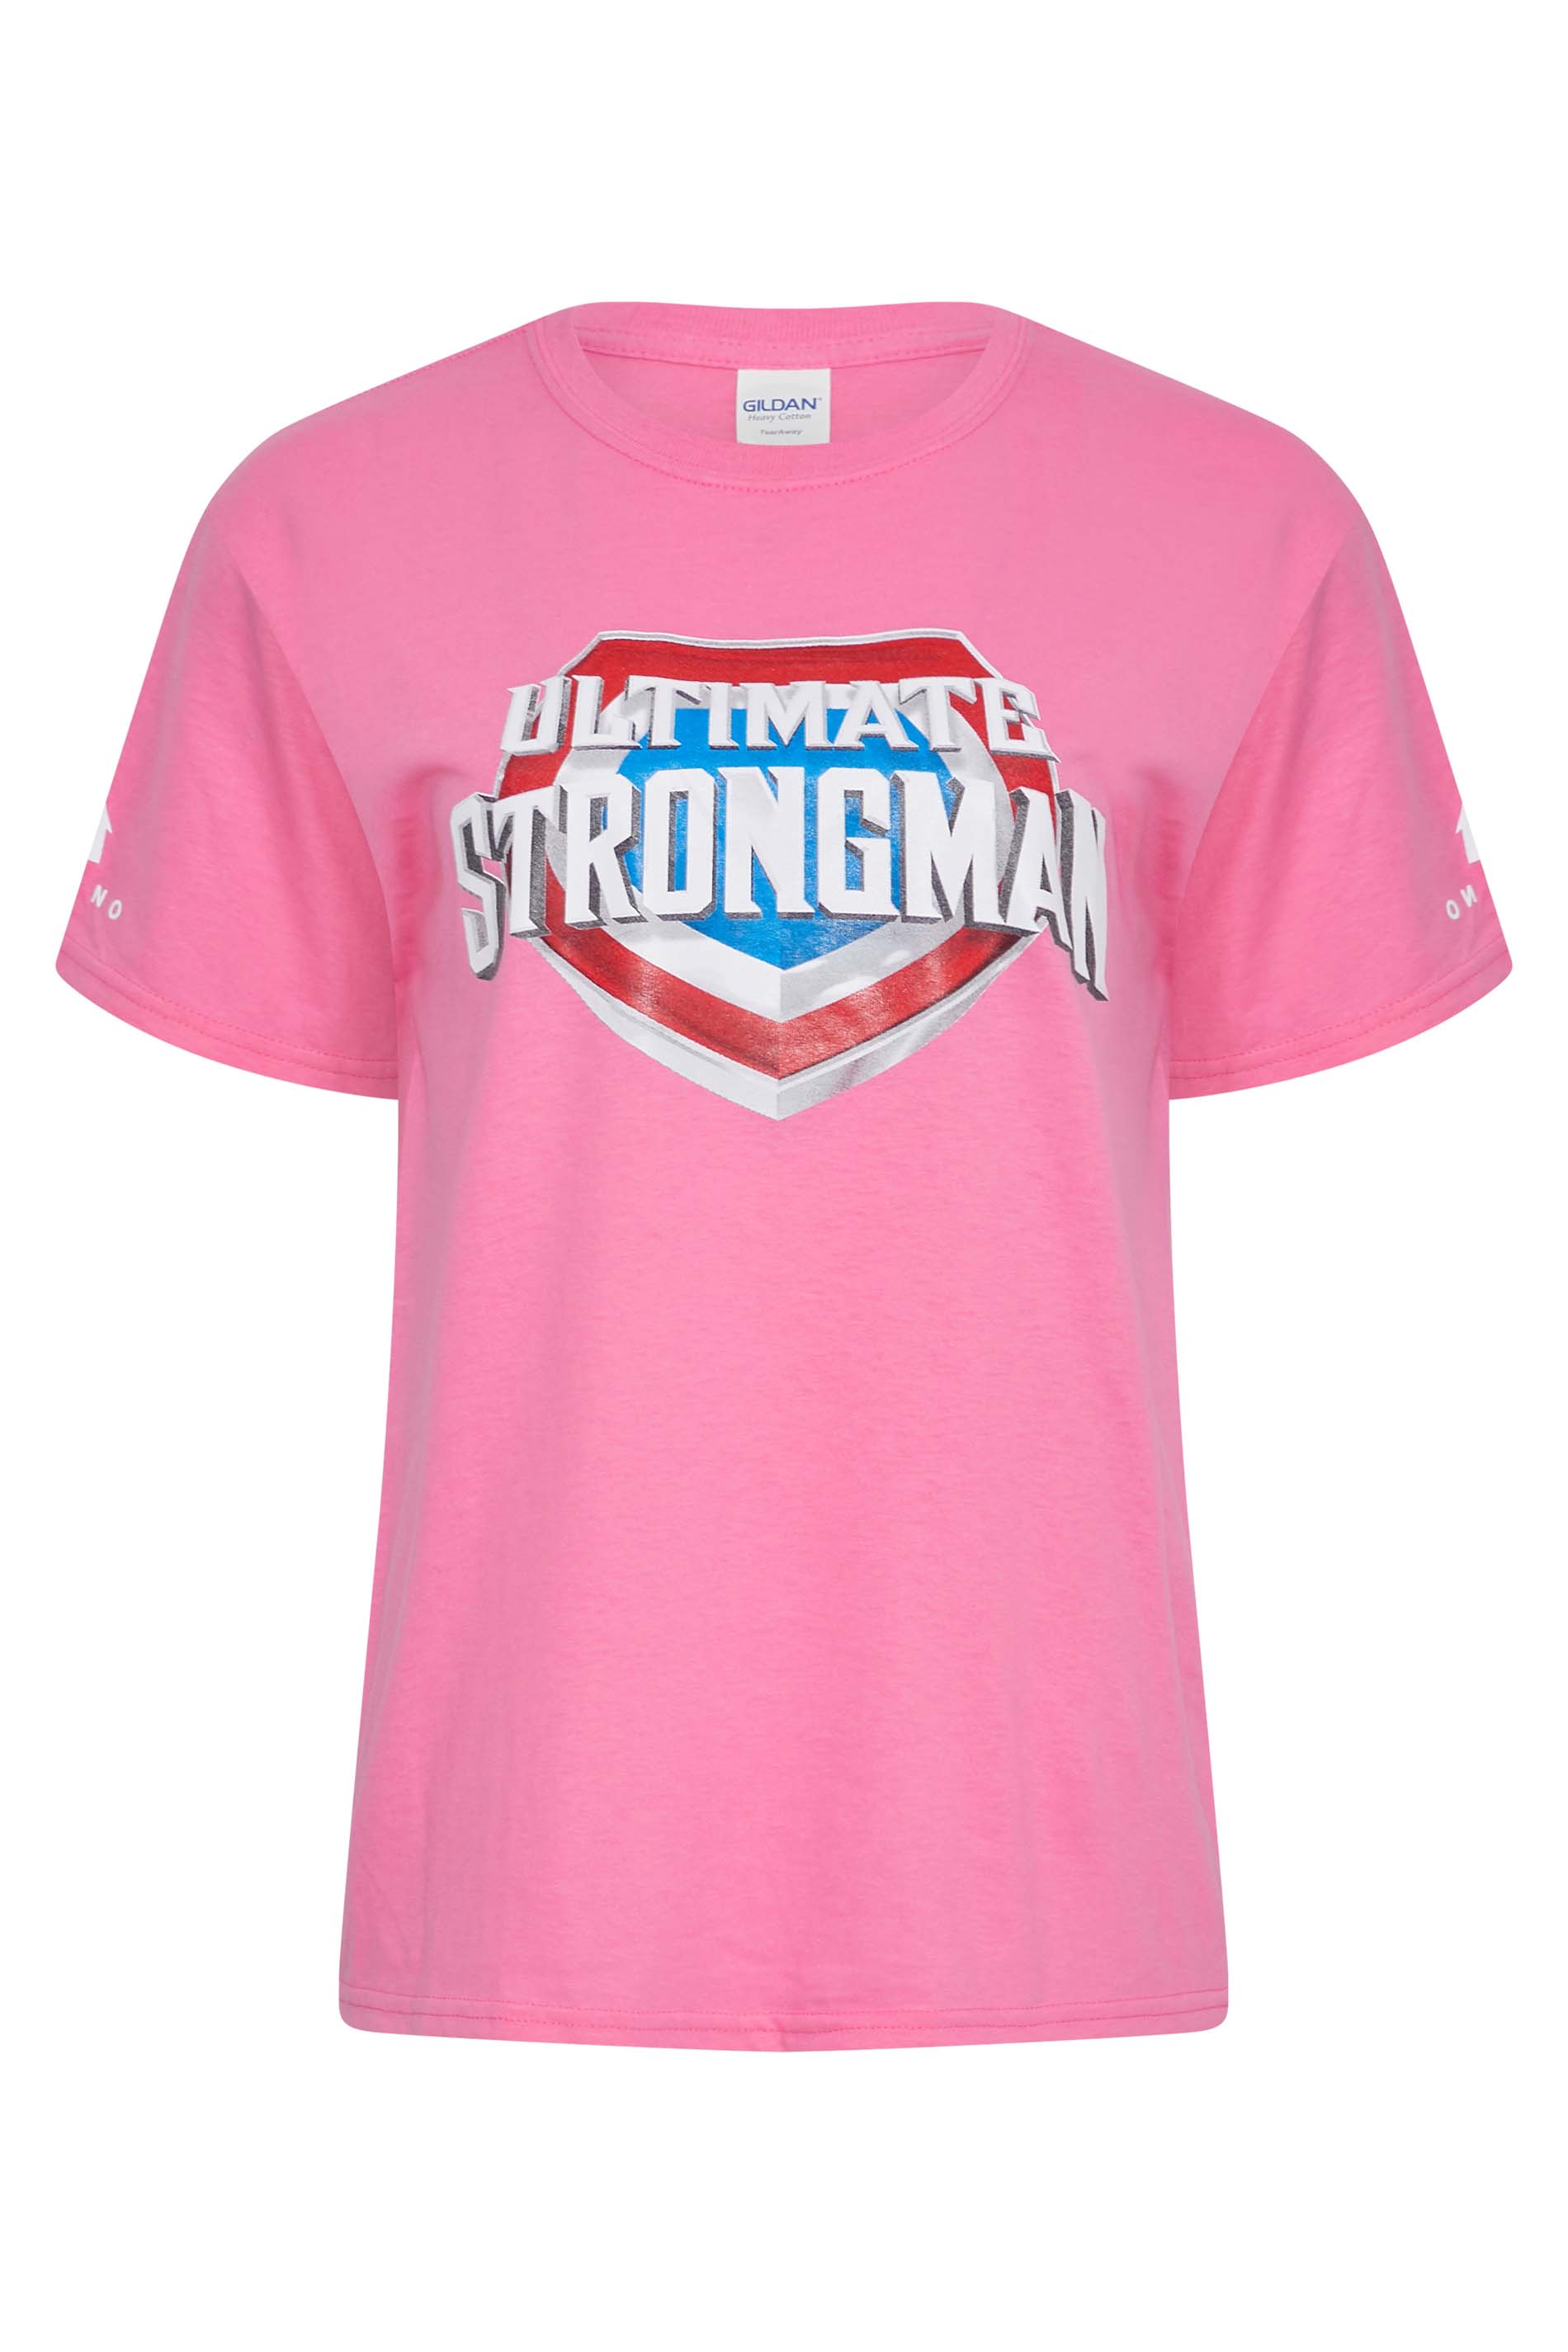 BadRhino Girls Light Pink Ultimate Strongman T-Shirt | BadRhino 1